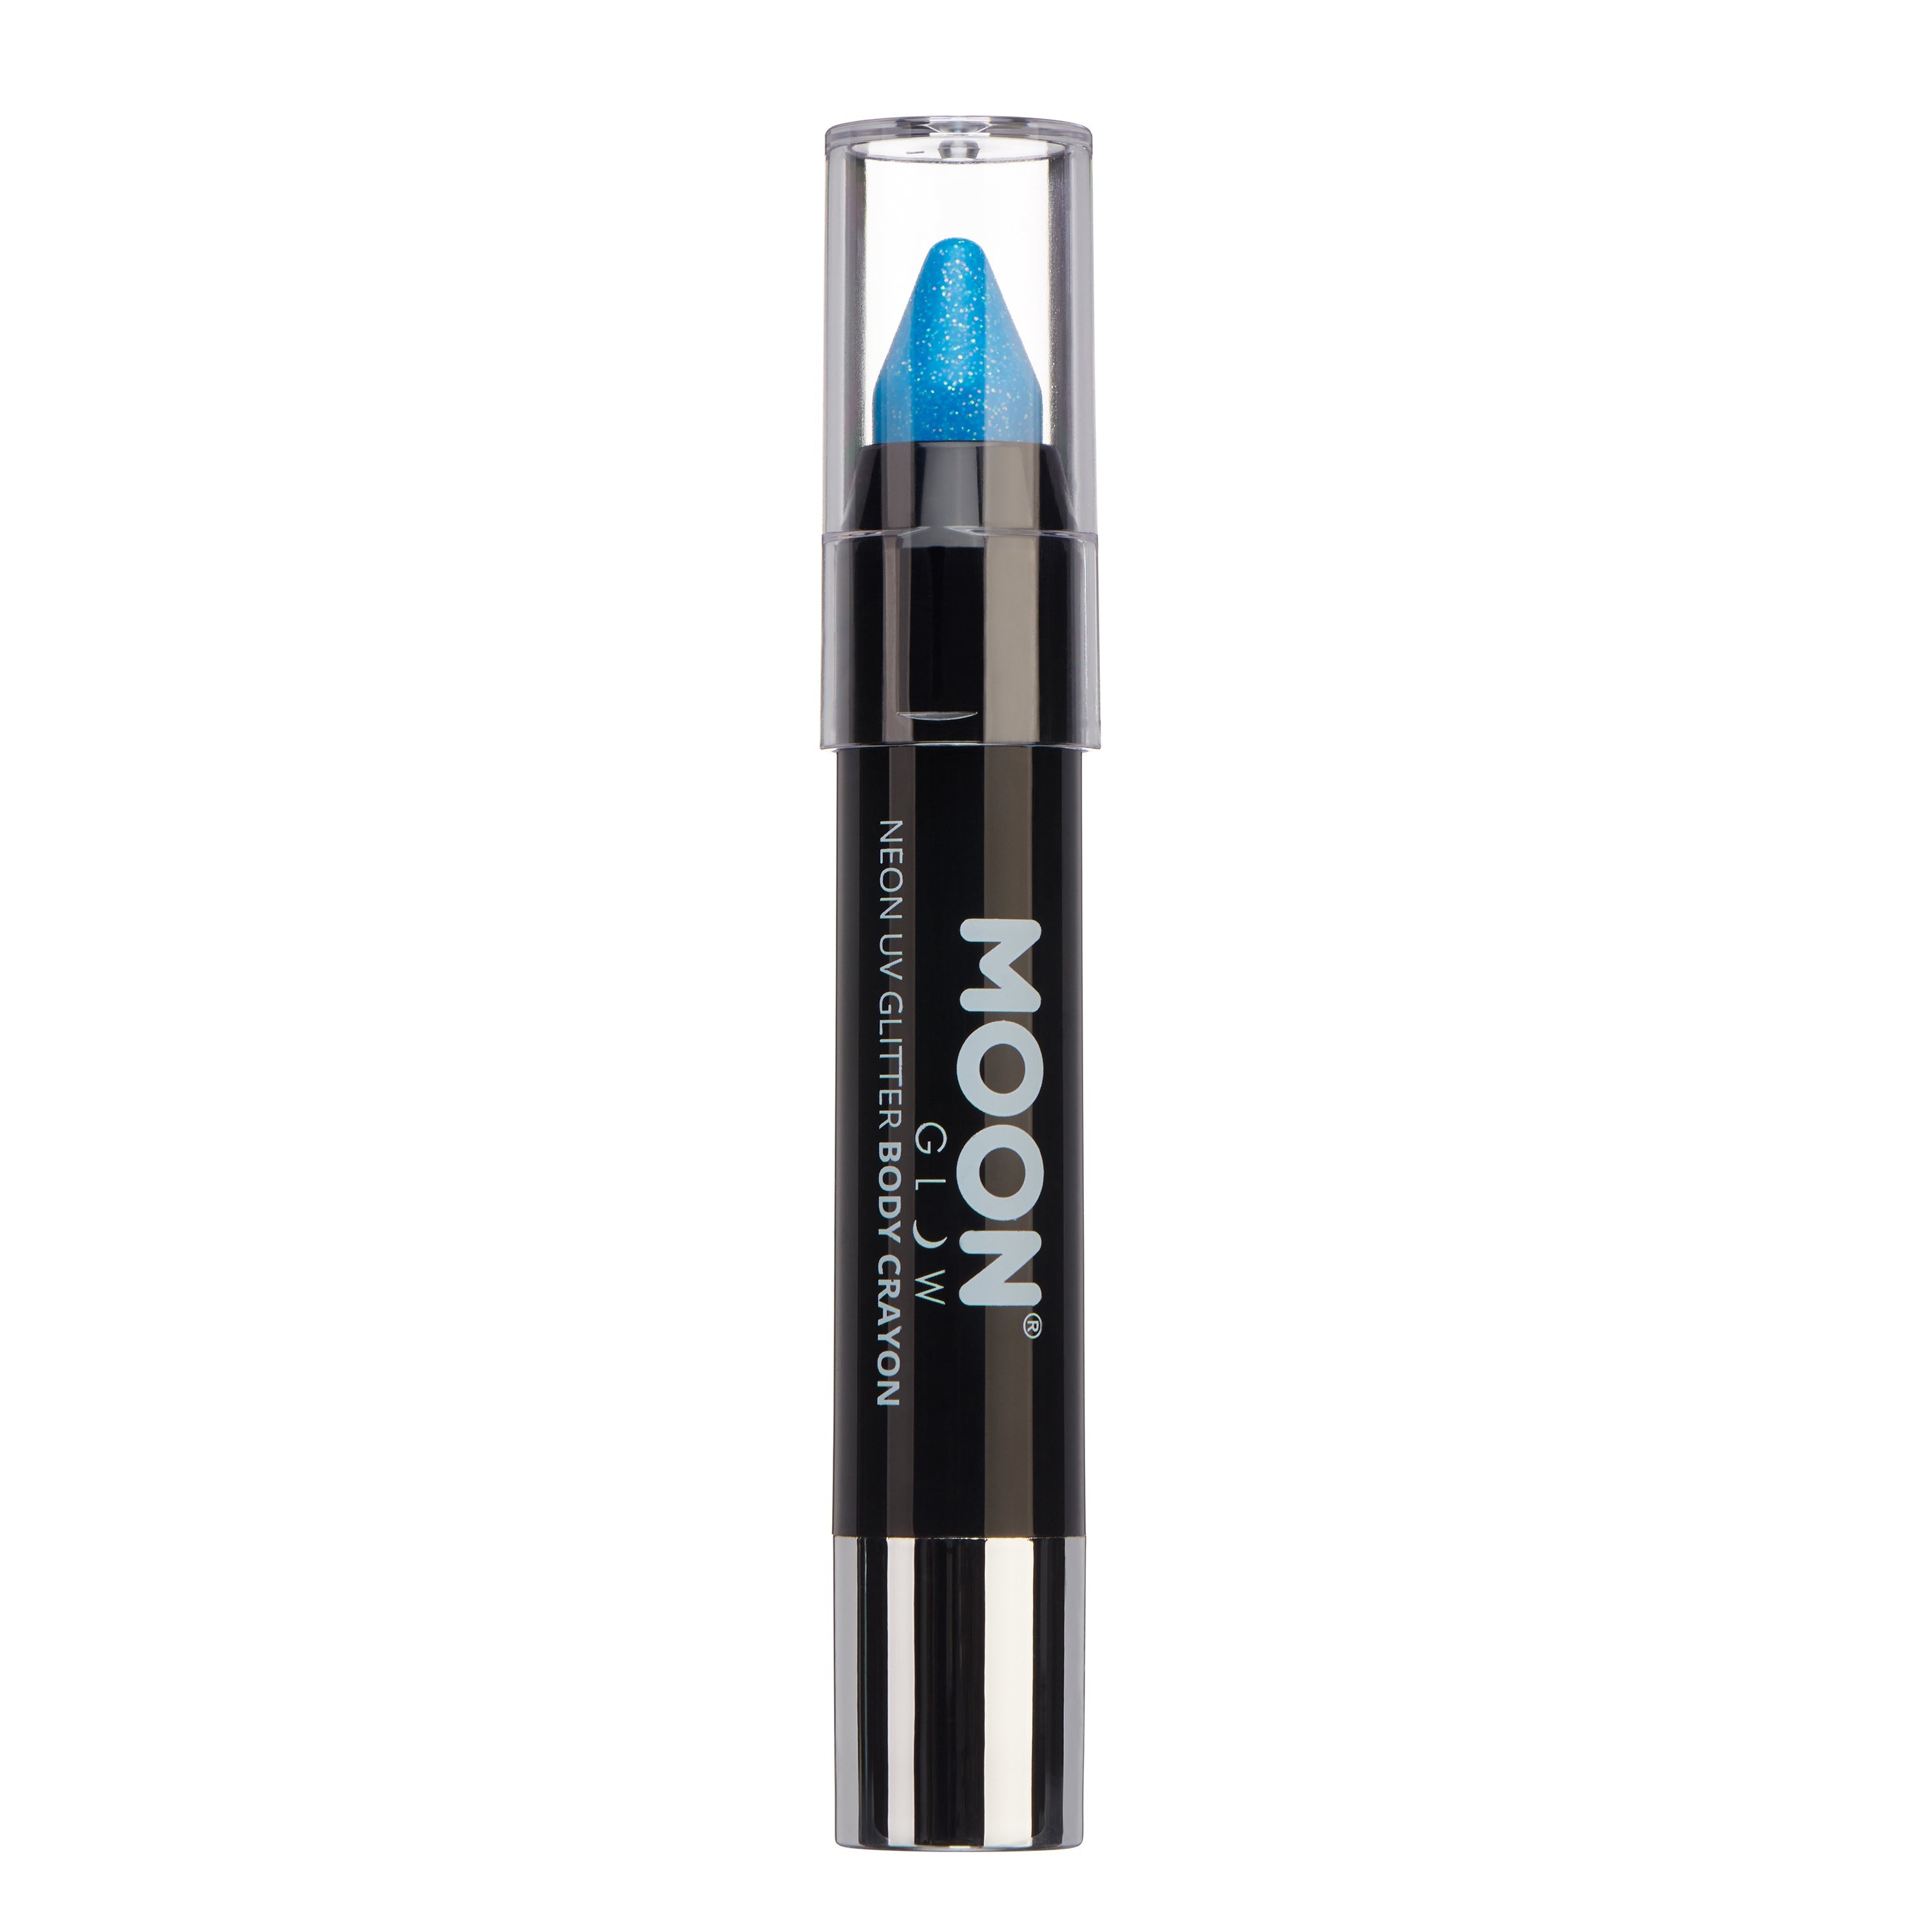 Blue - Neon UV Glow Blacklight Glitter Face & Body Crayon, 3.5g. Cosmetically certified, FDA & Health Canada compliant and cruelty free.